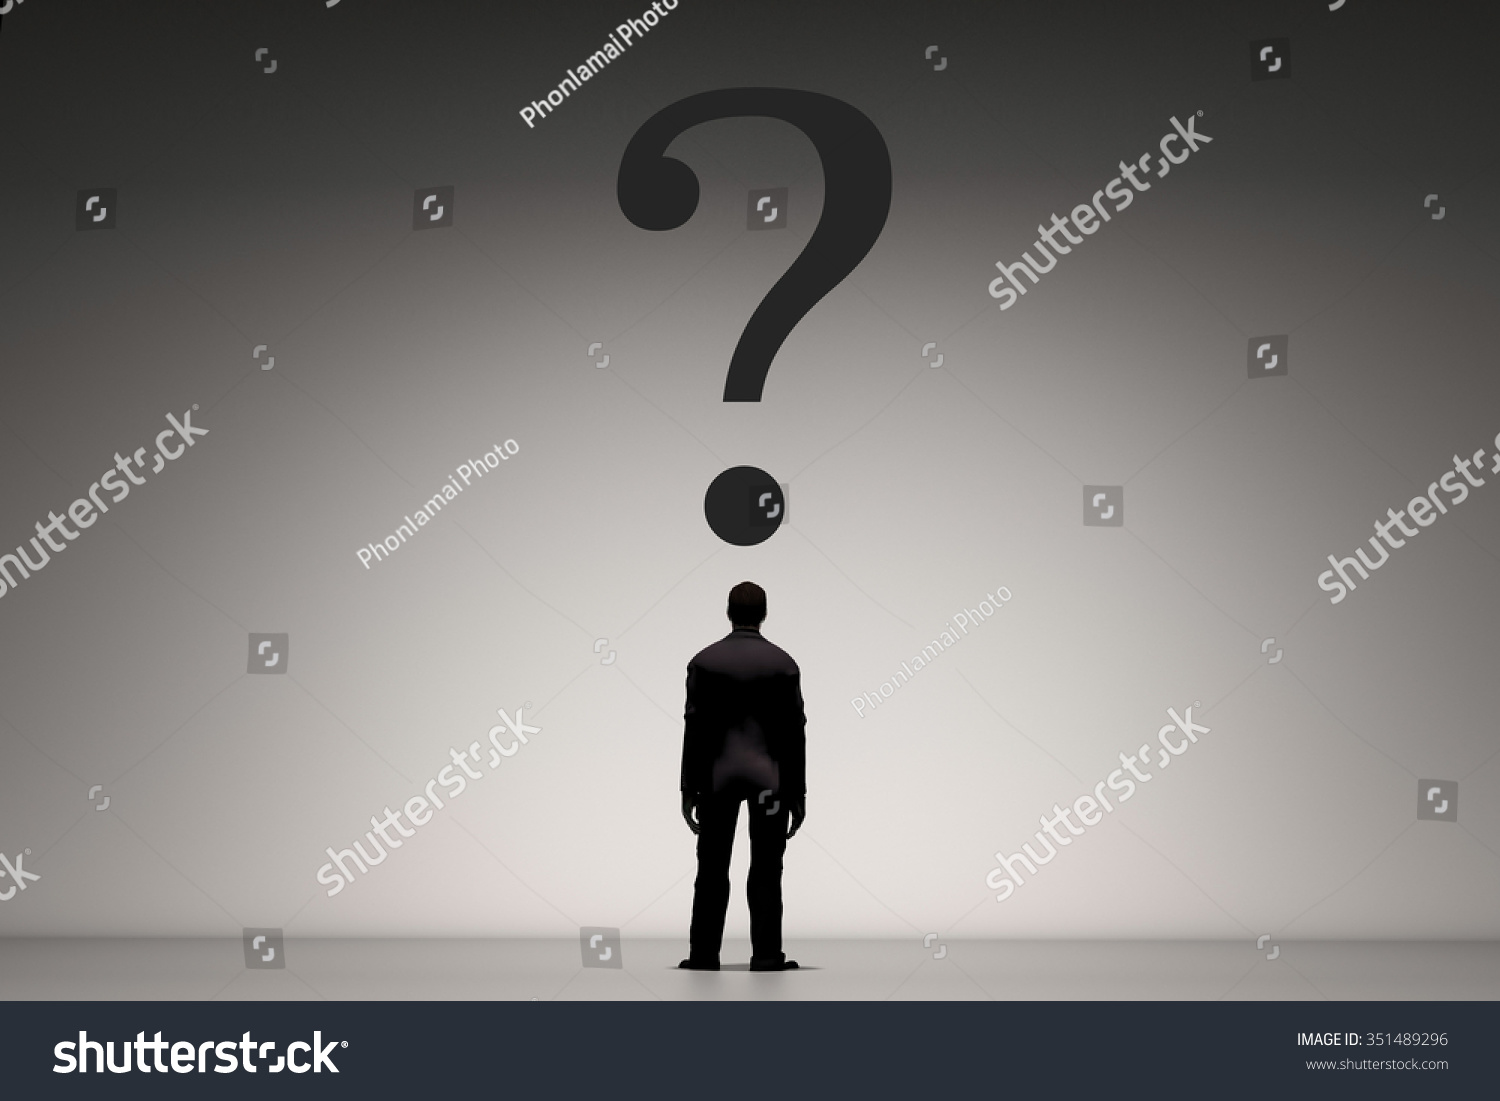 Silhouette Businessman Question Mark Ilustrações Stock 351489296 Shutterstock